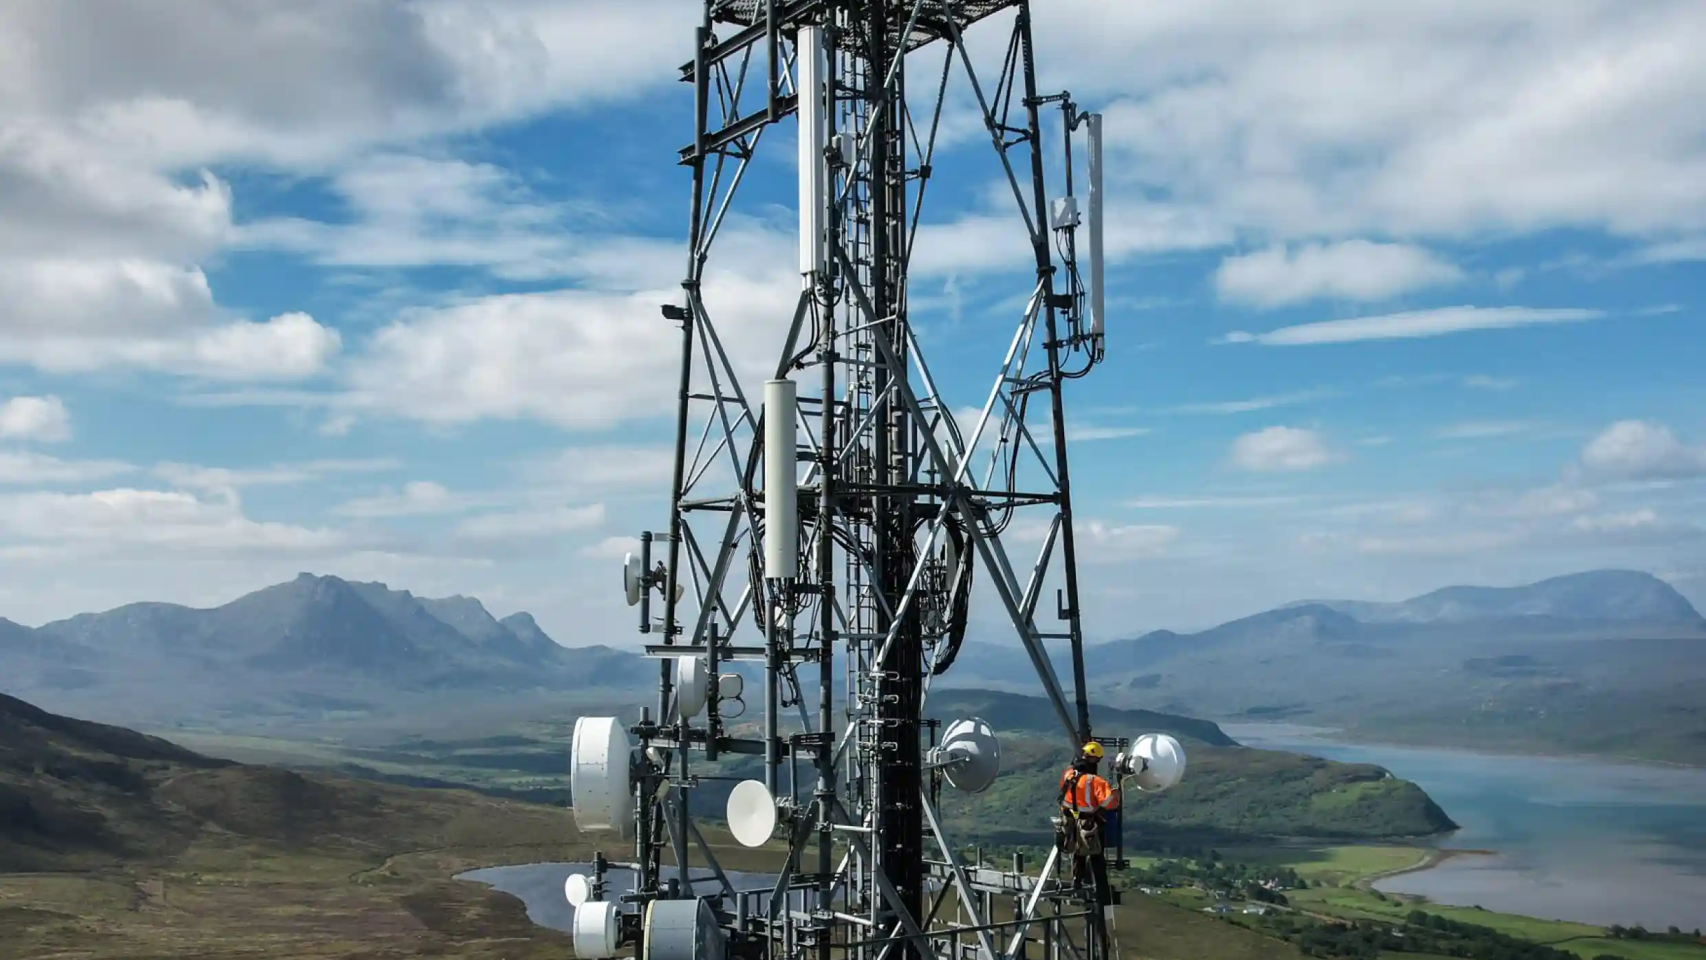 Torre de telecomunicaciones